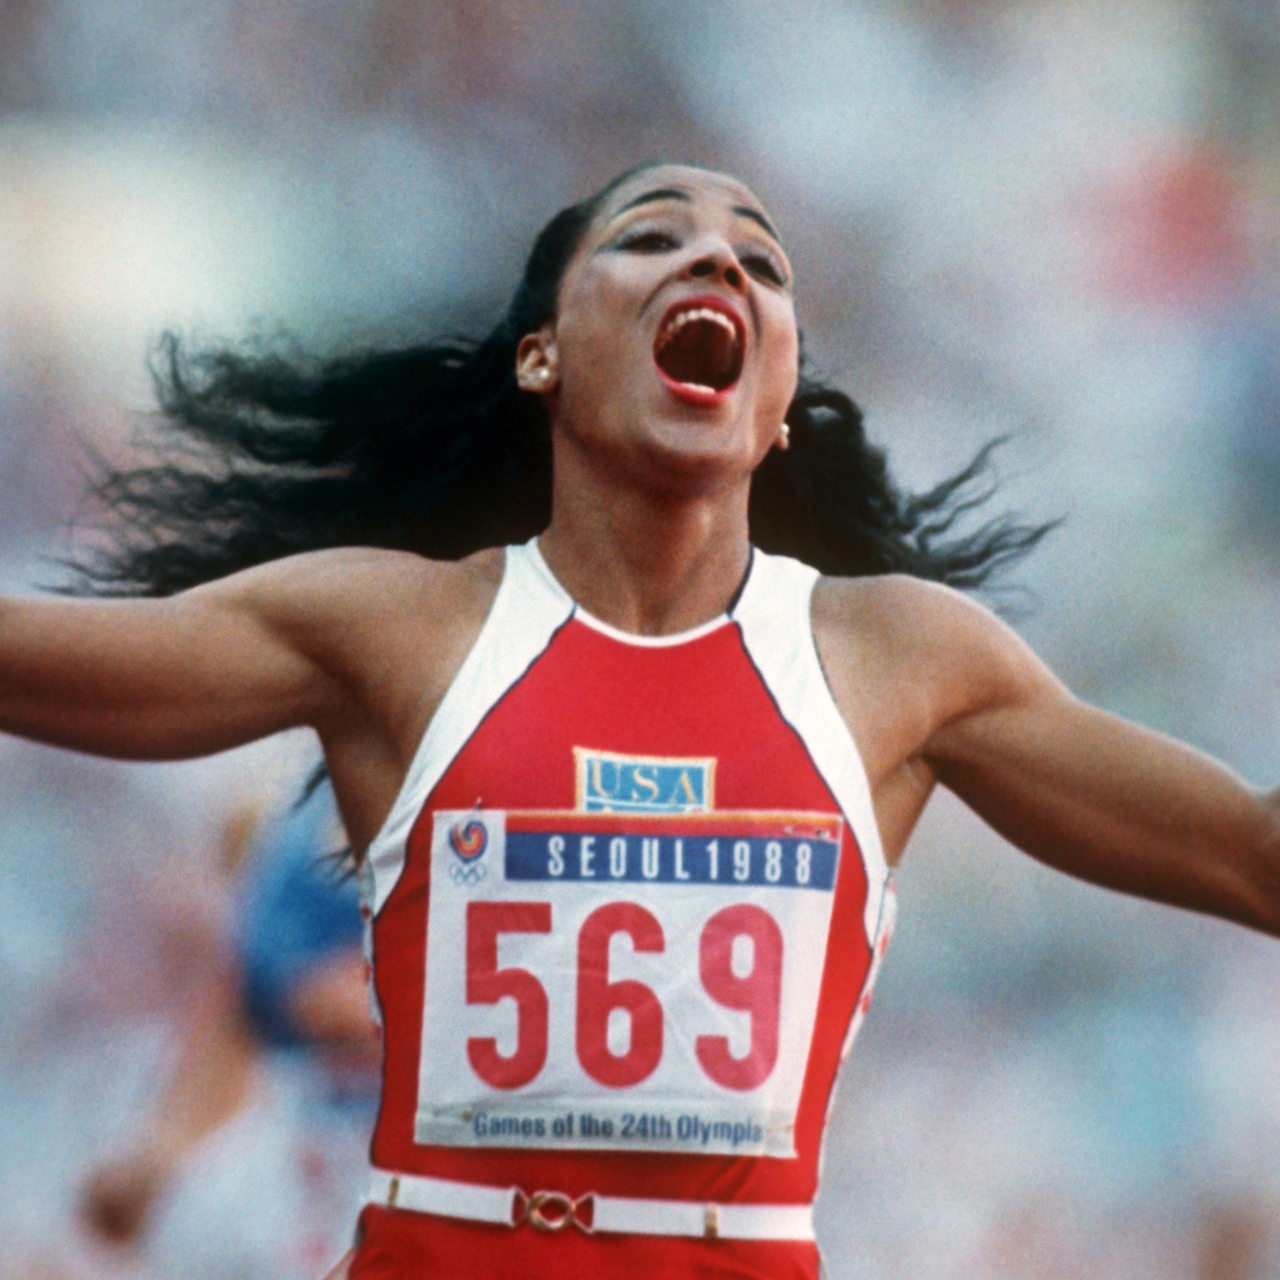 29.09.1988, Südkorea, Seoul: Jubelnd reißt Florence Grifffith-Joyner ihre Arme in die Höhe.